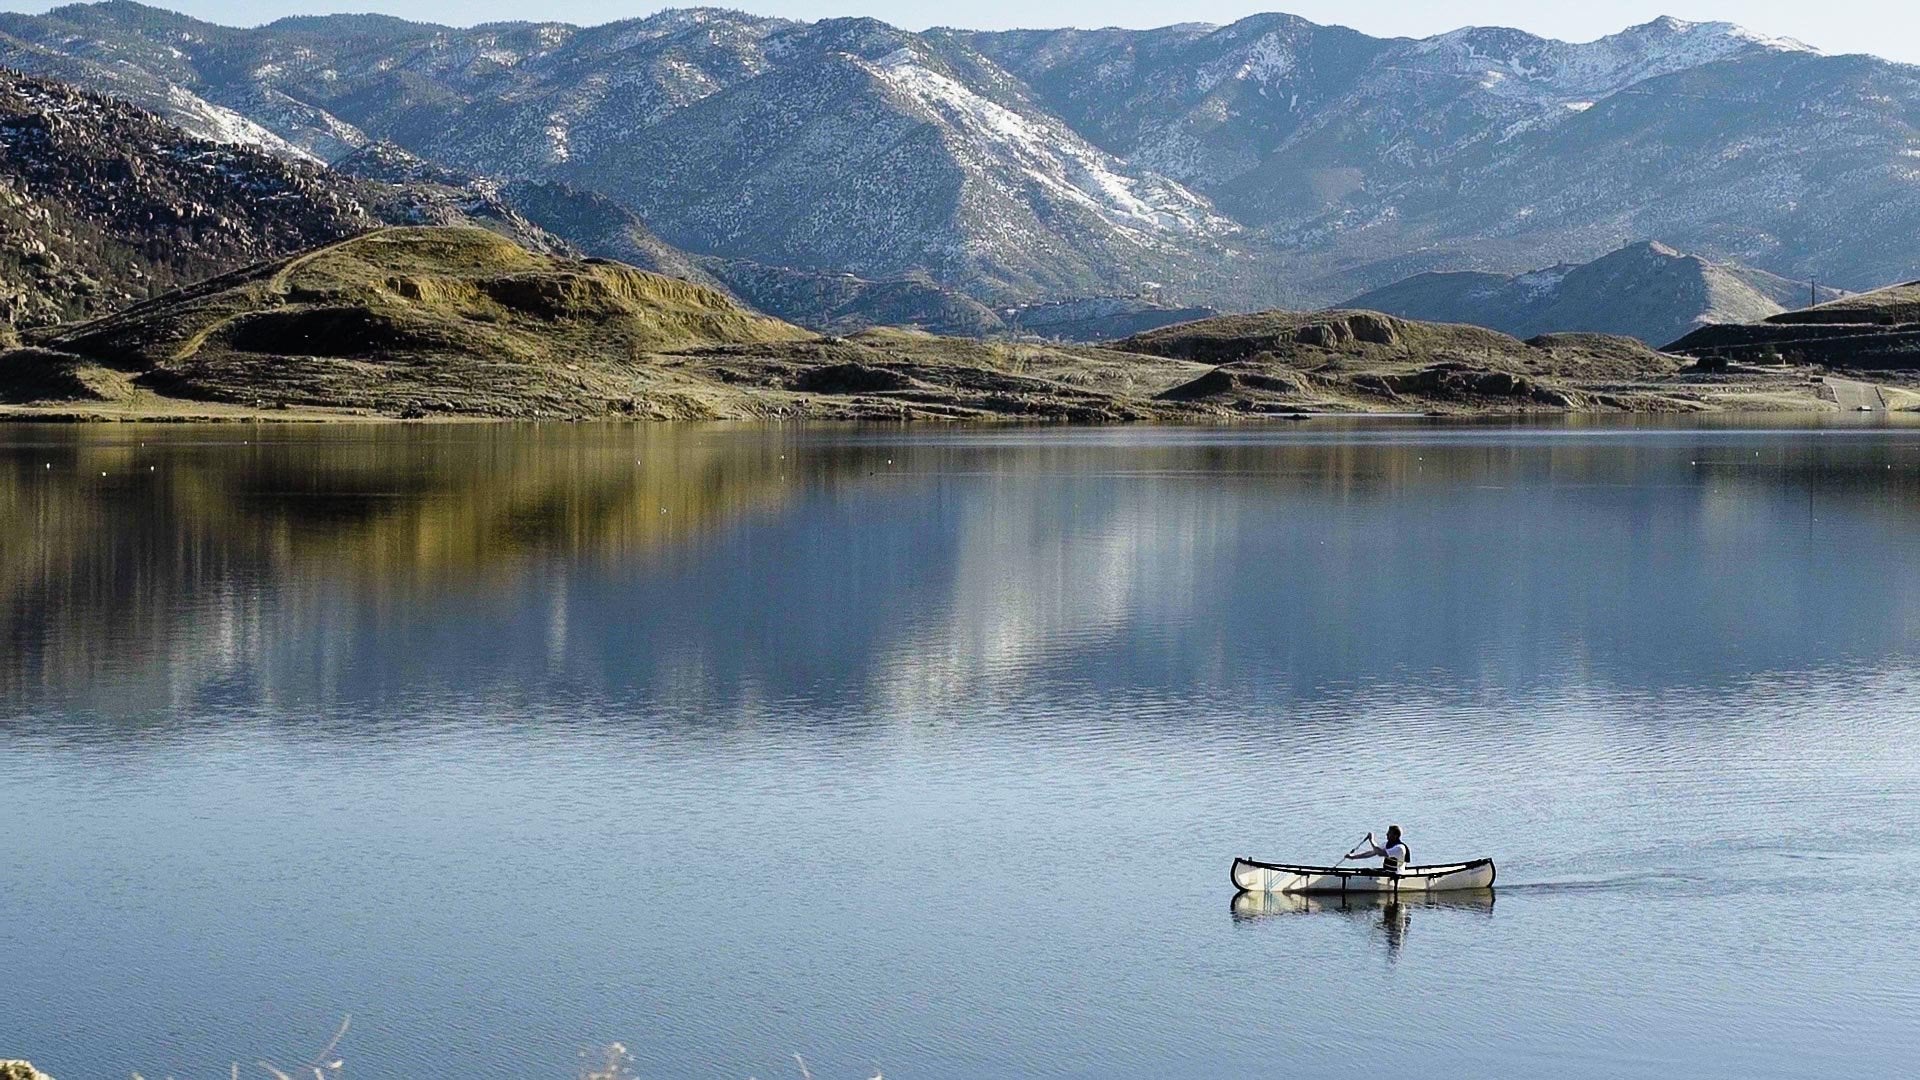 mycanoe duo two person folding canoe on still lake in mountains